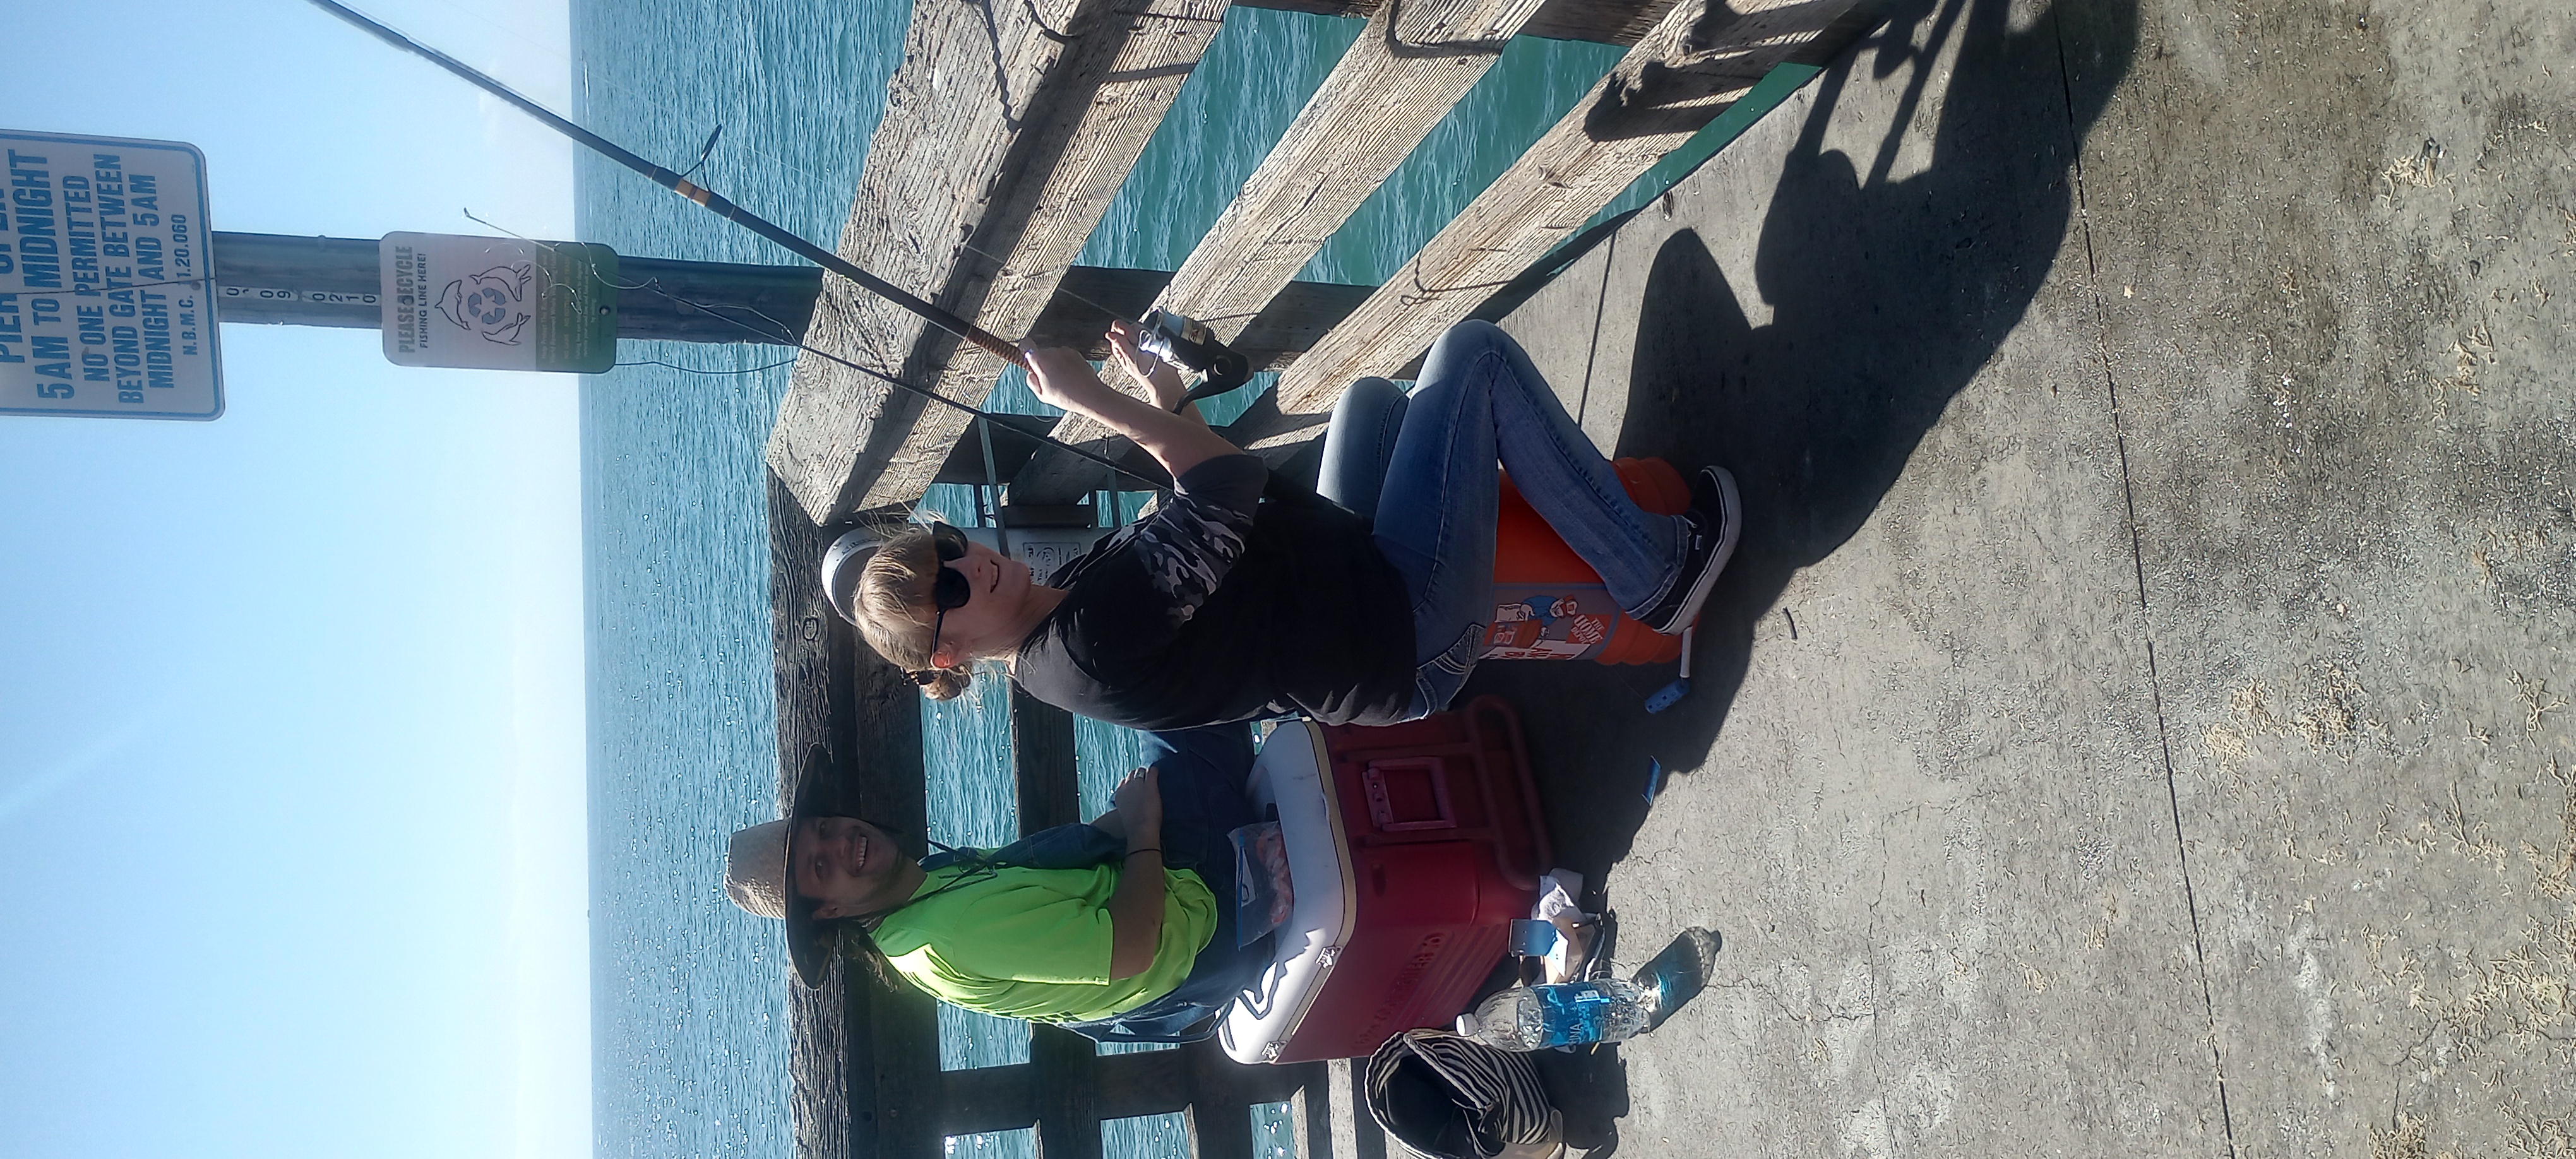 Glenn and Tracie on Balboa Pier